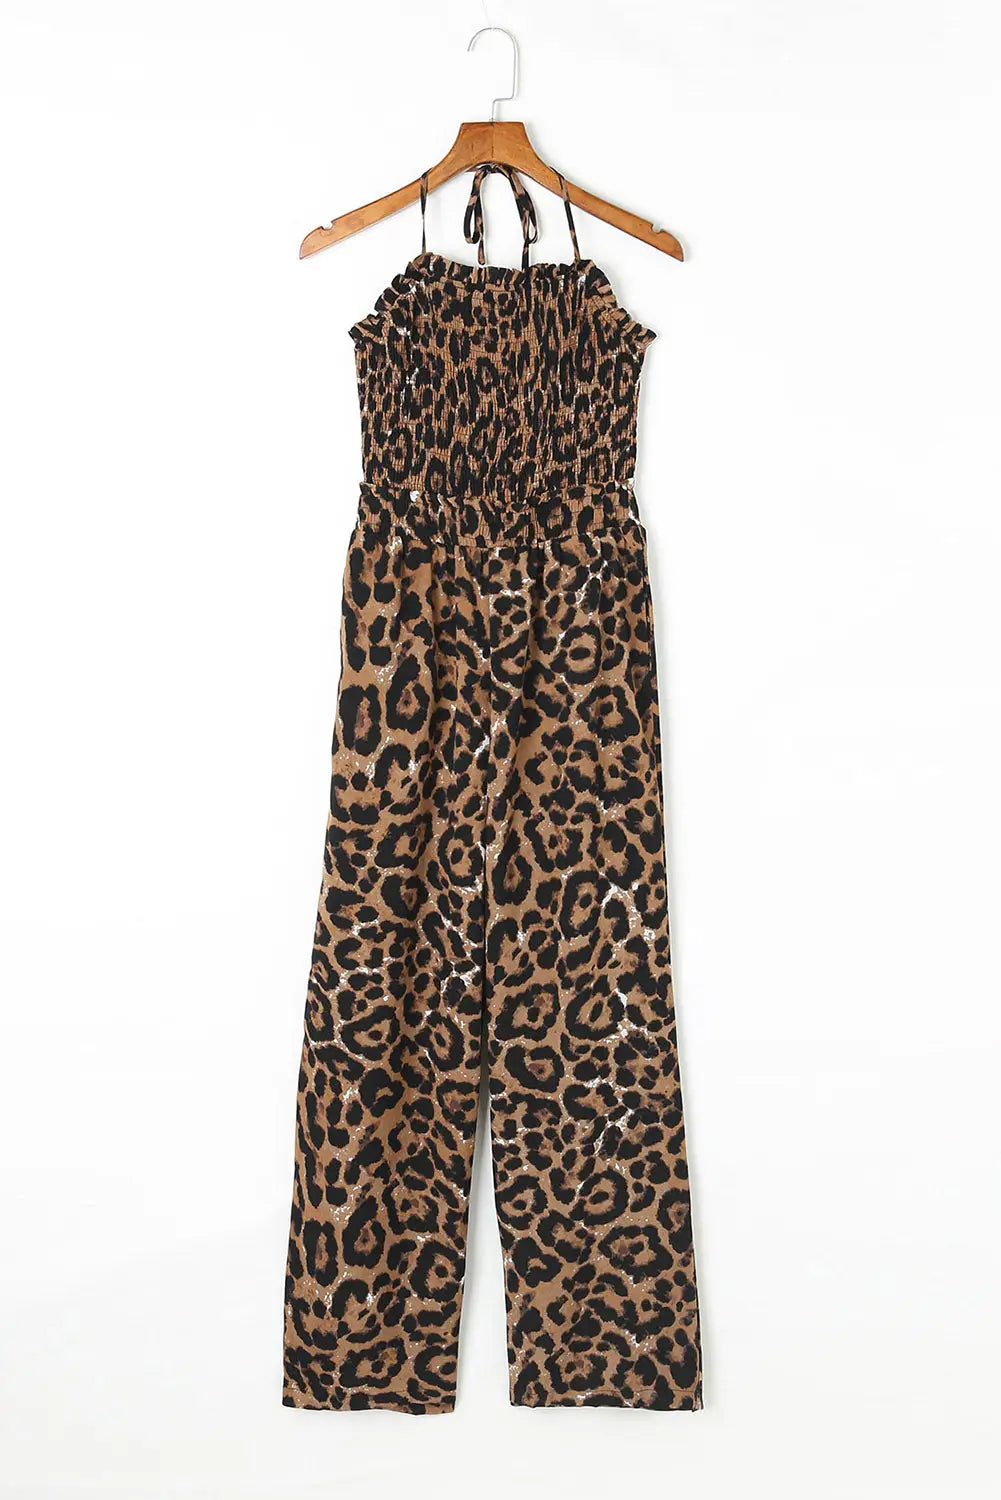 Leopard print halter neck backless wide leg jumpsuit - jumpsuits & rompers